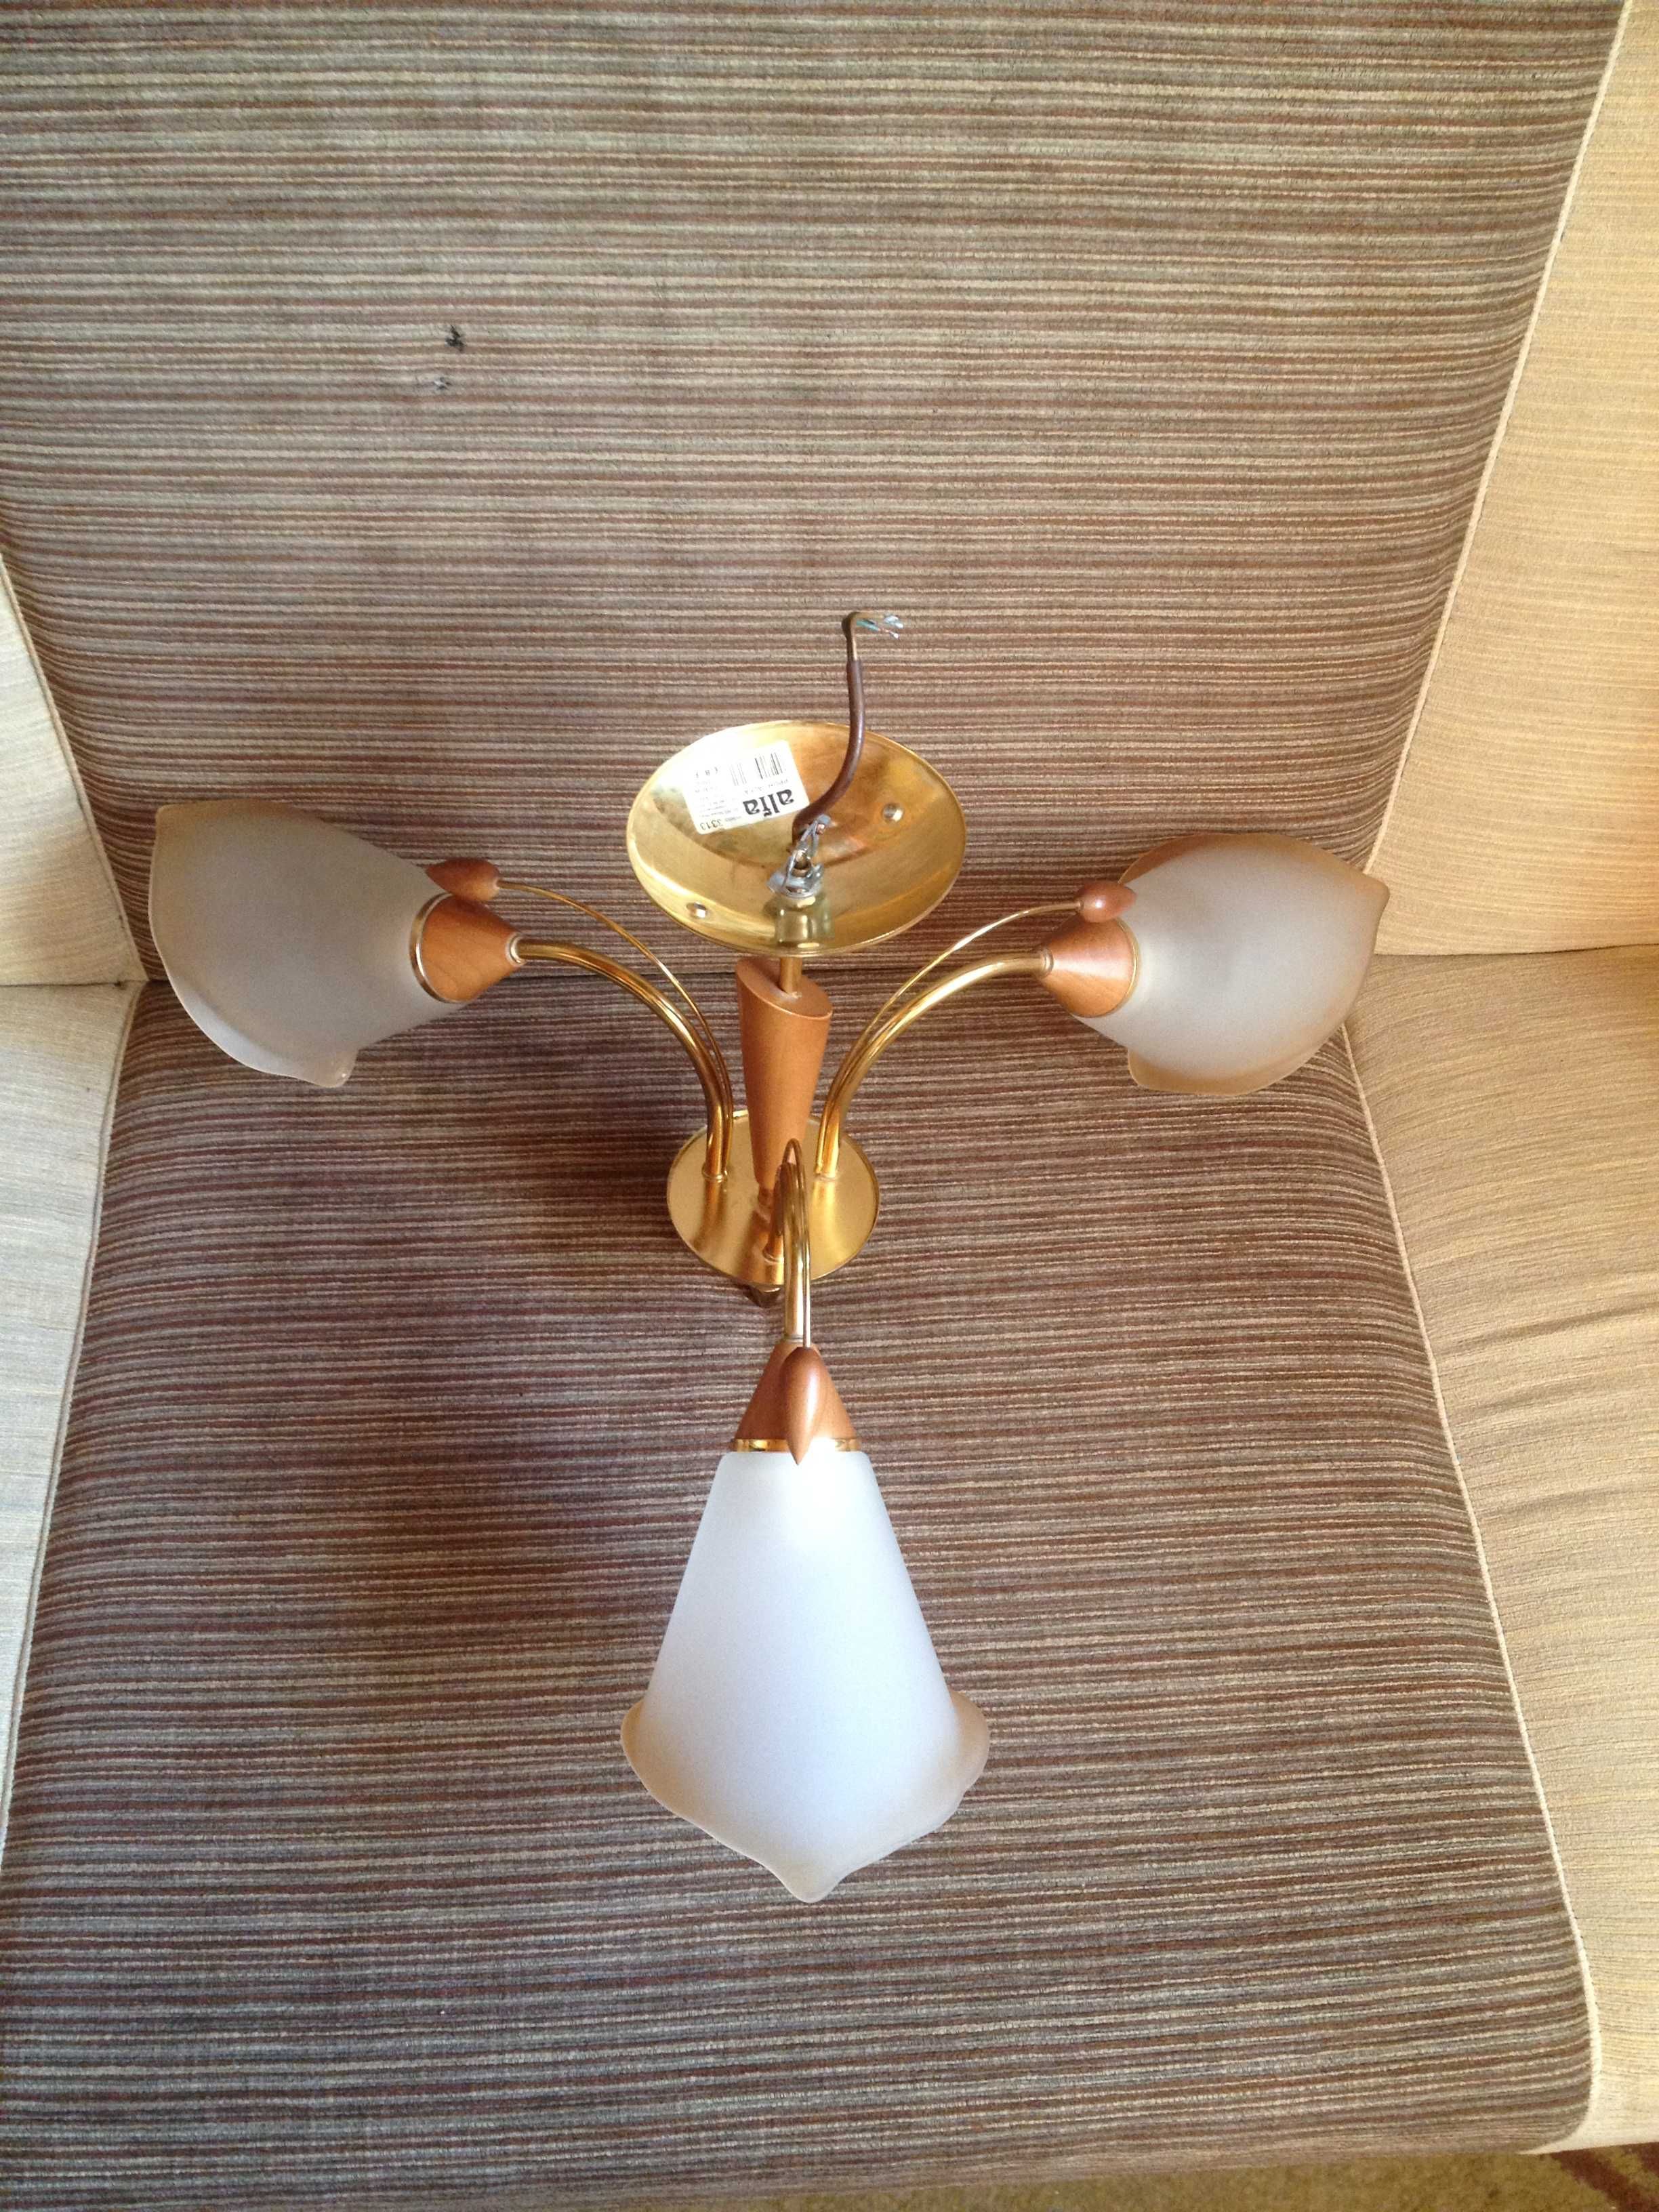 Lampa żyrandol kolekcjonerski Cypelek/ Alfa 3313